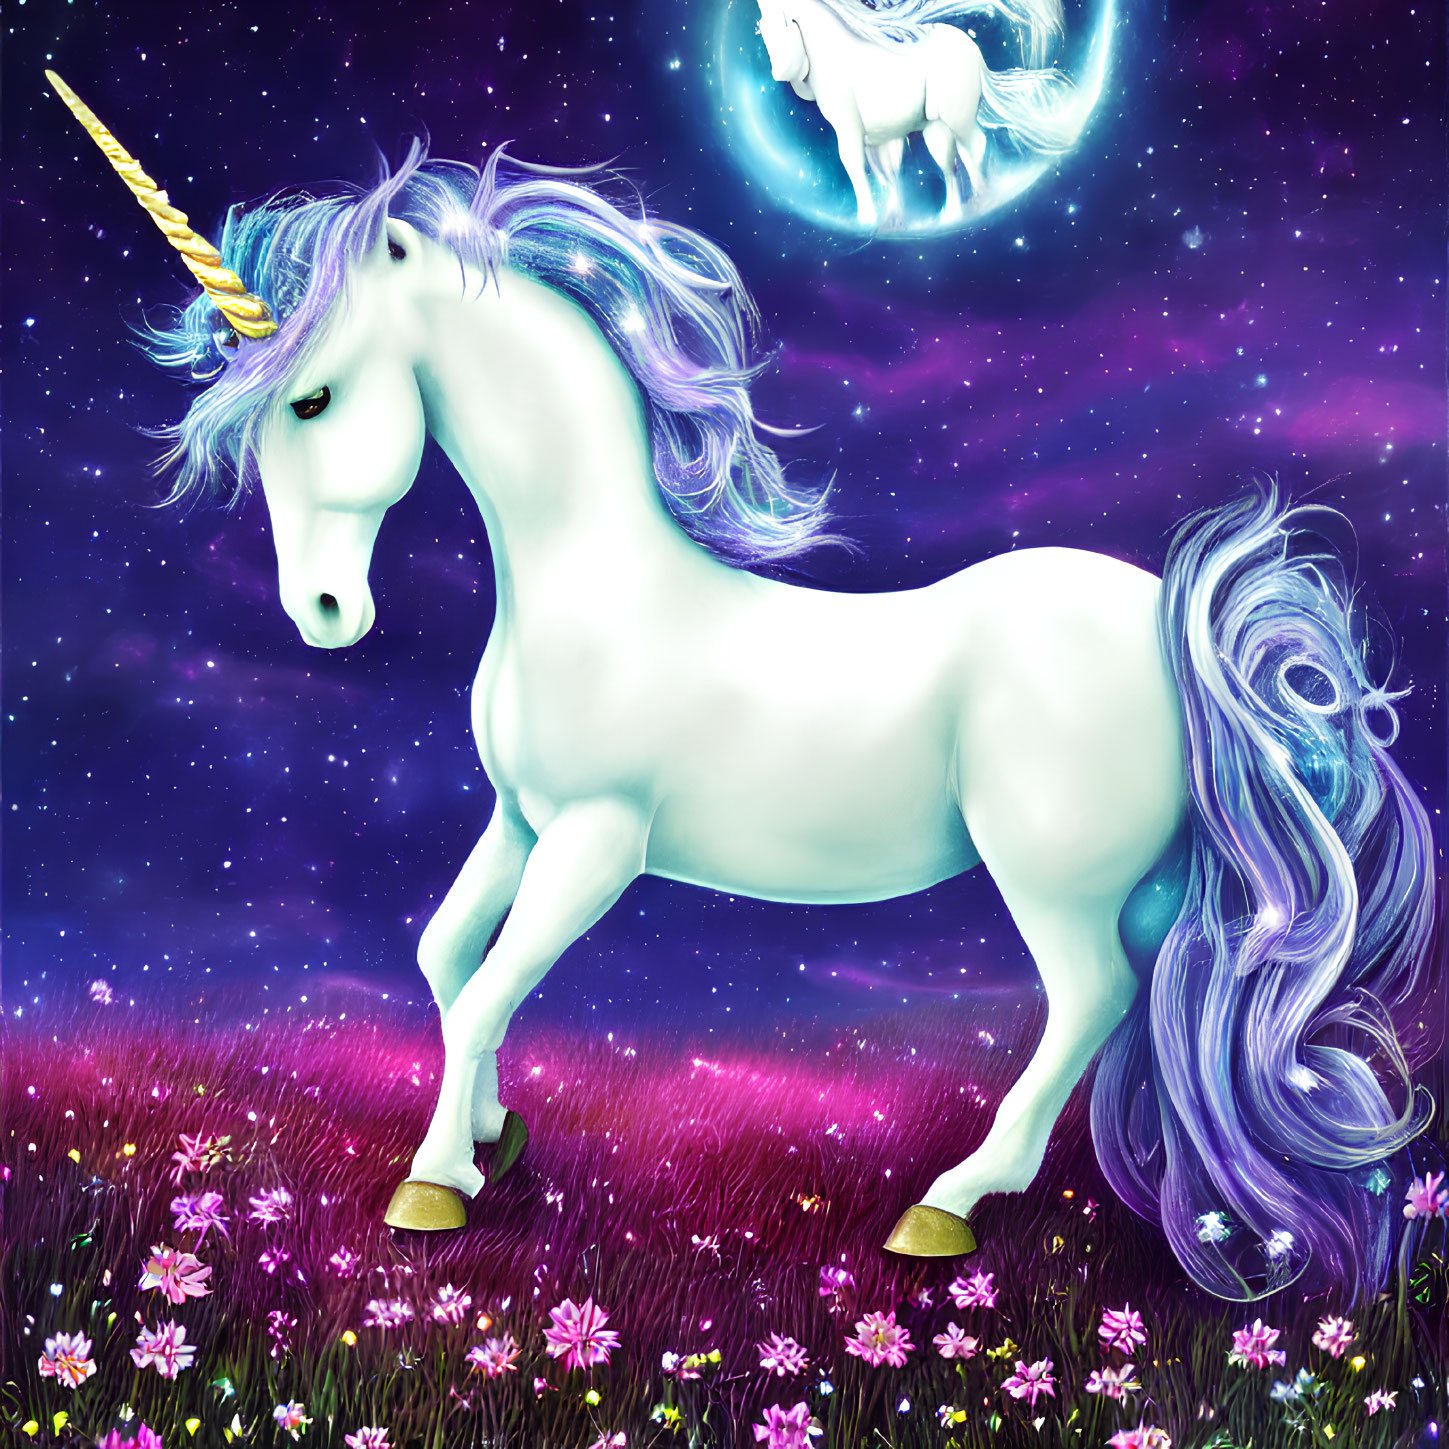 White unicorn with flowing mane in flower field under starry sky.